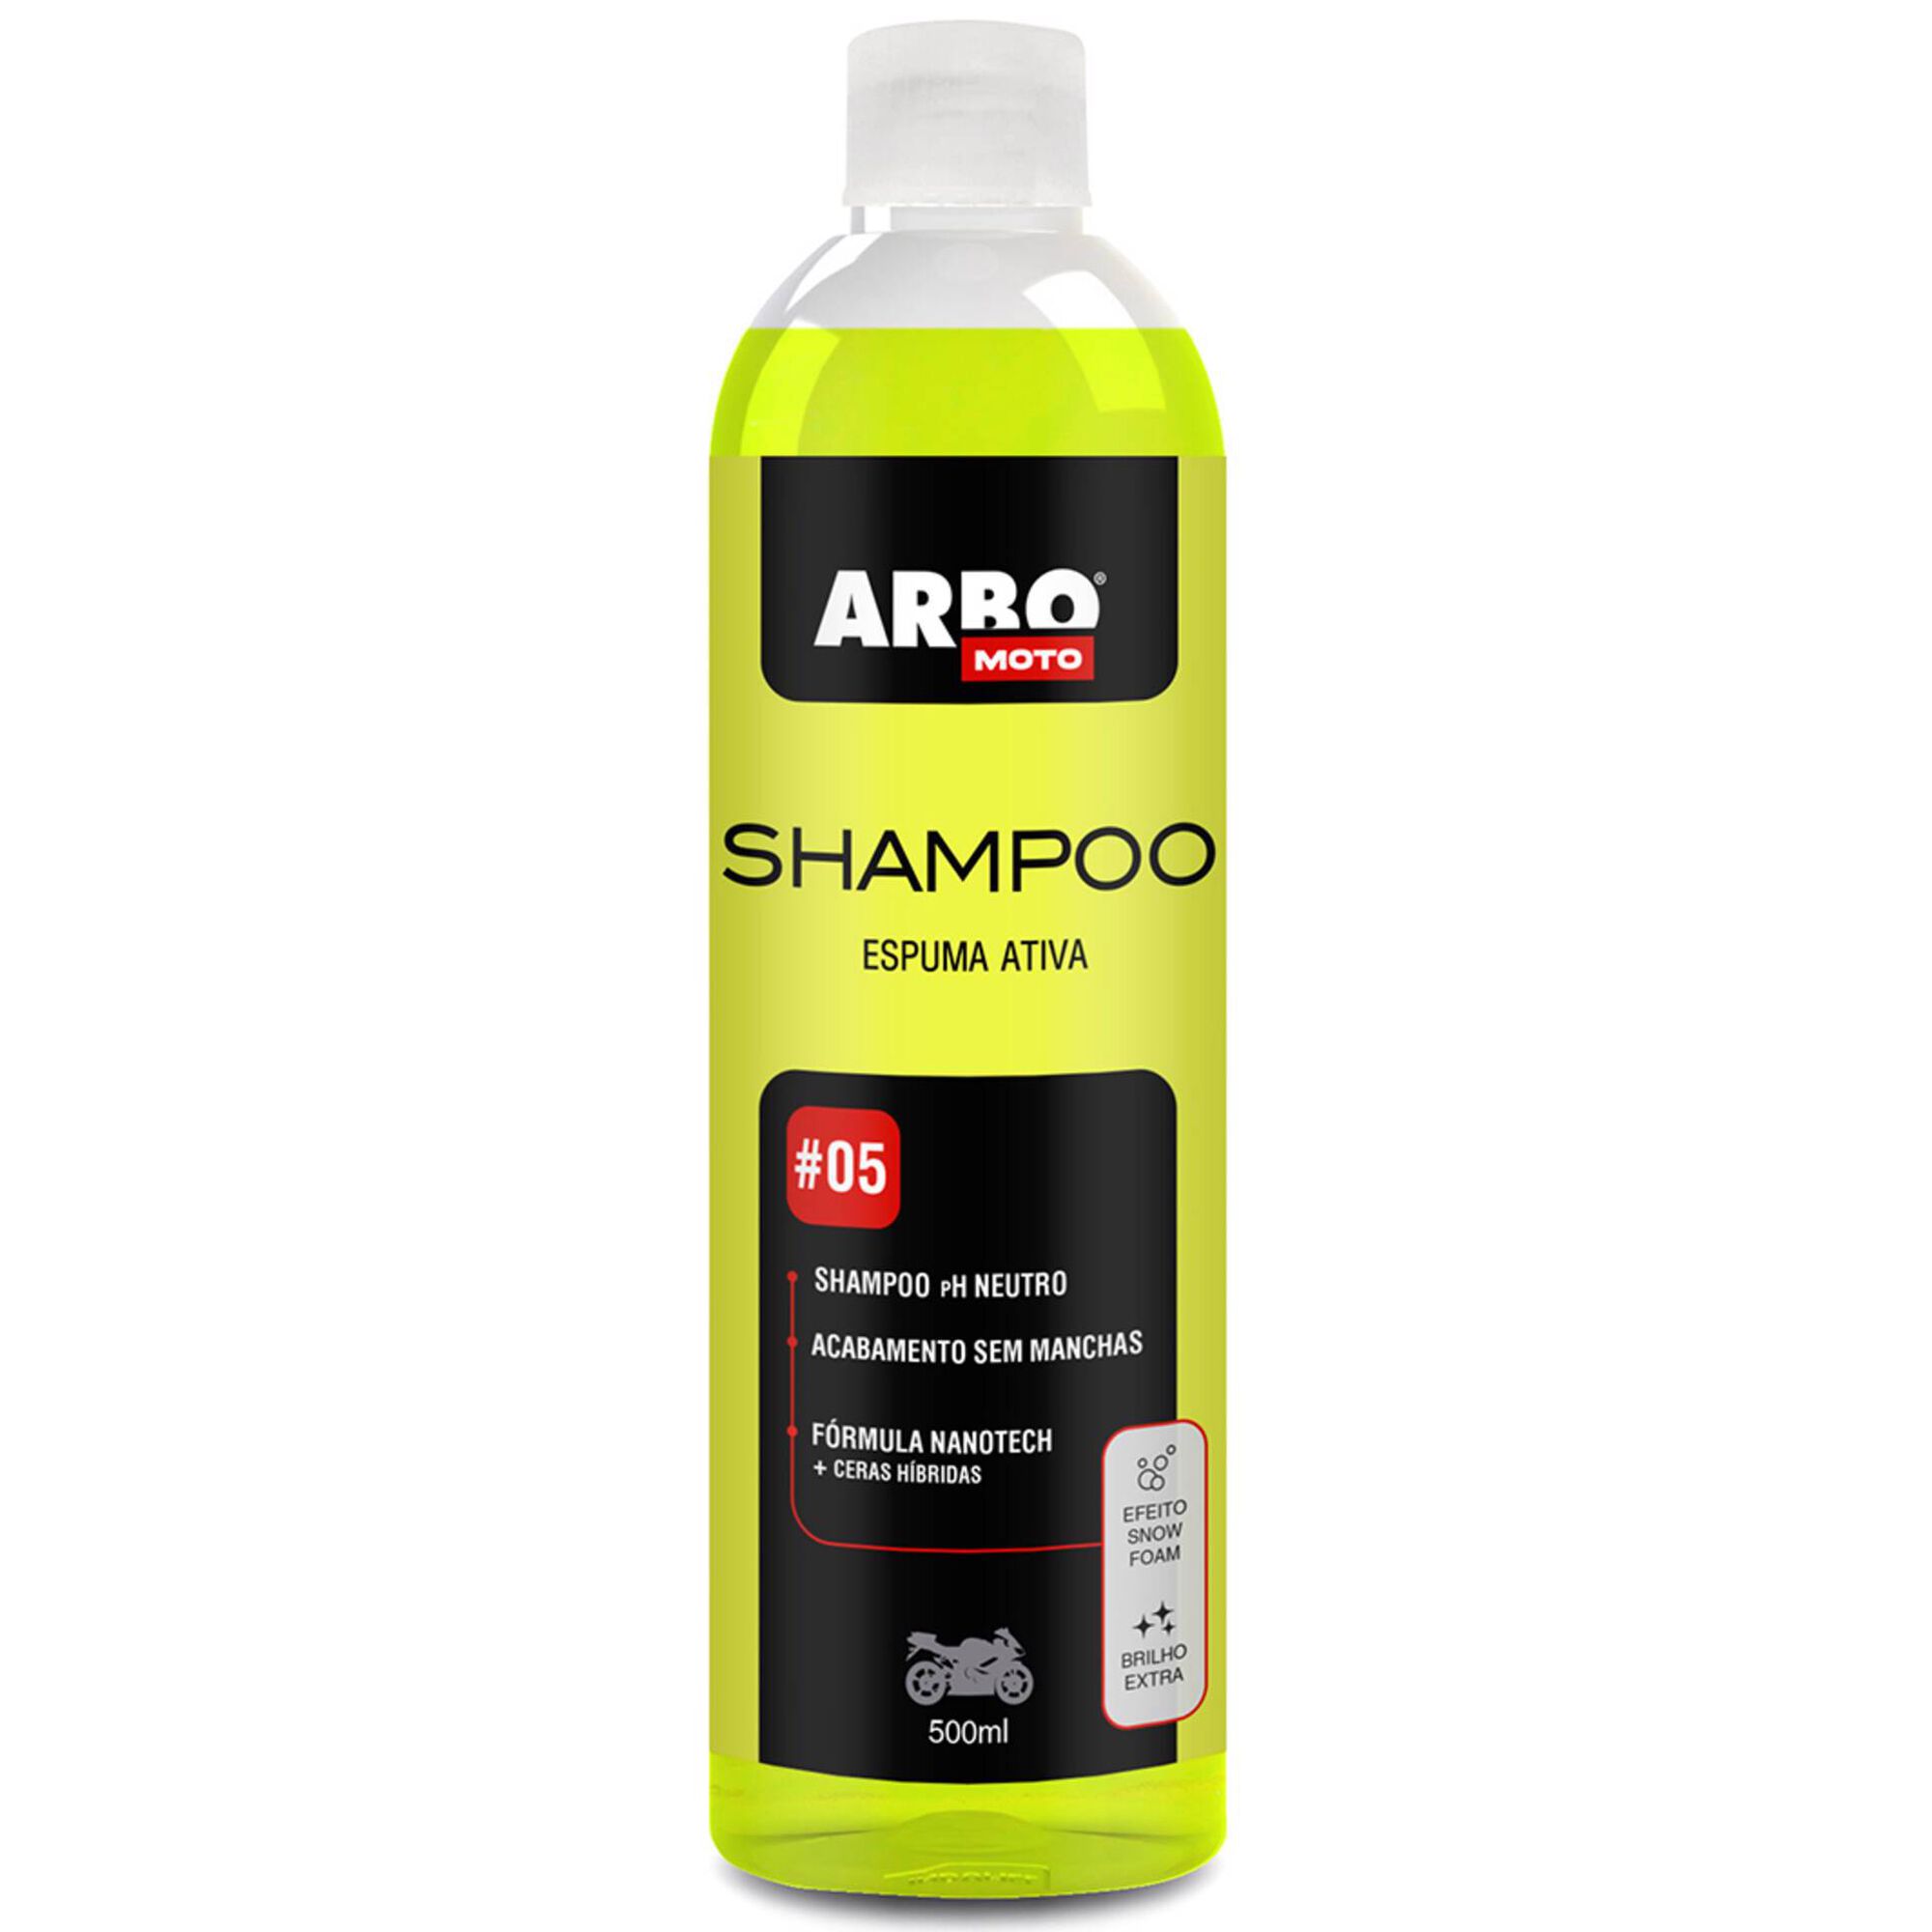 Shampoo Espuma Ativa Moto